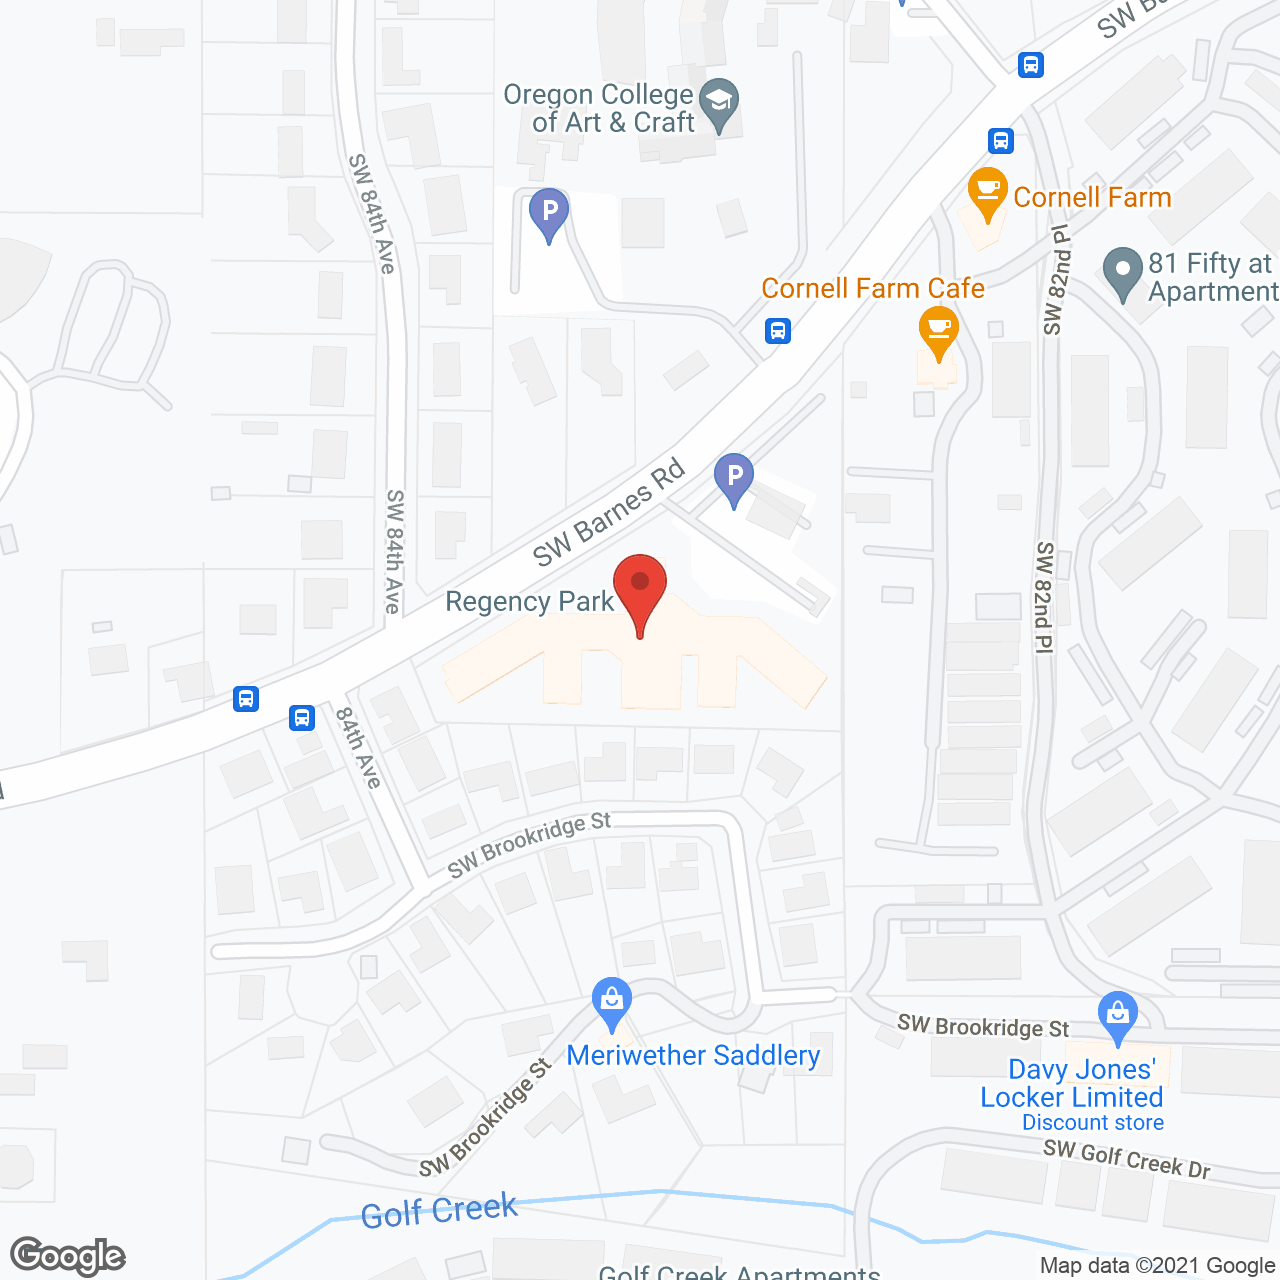 Regency Park in google map